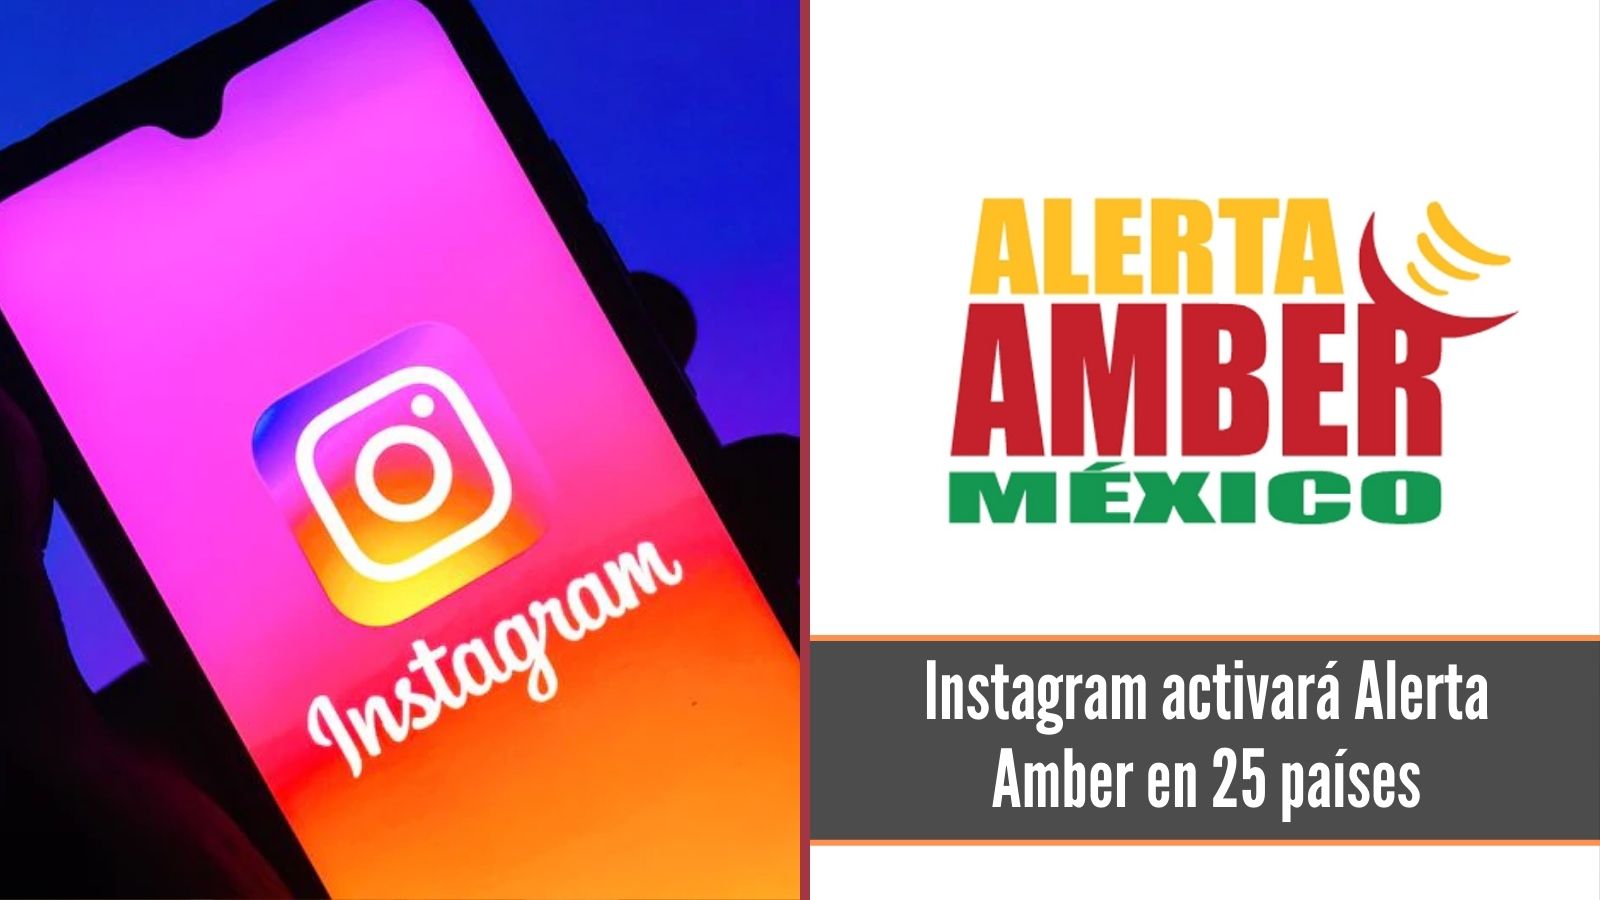 Instagram activará Alerta Amber